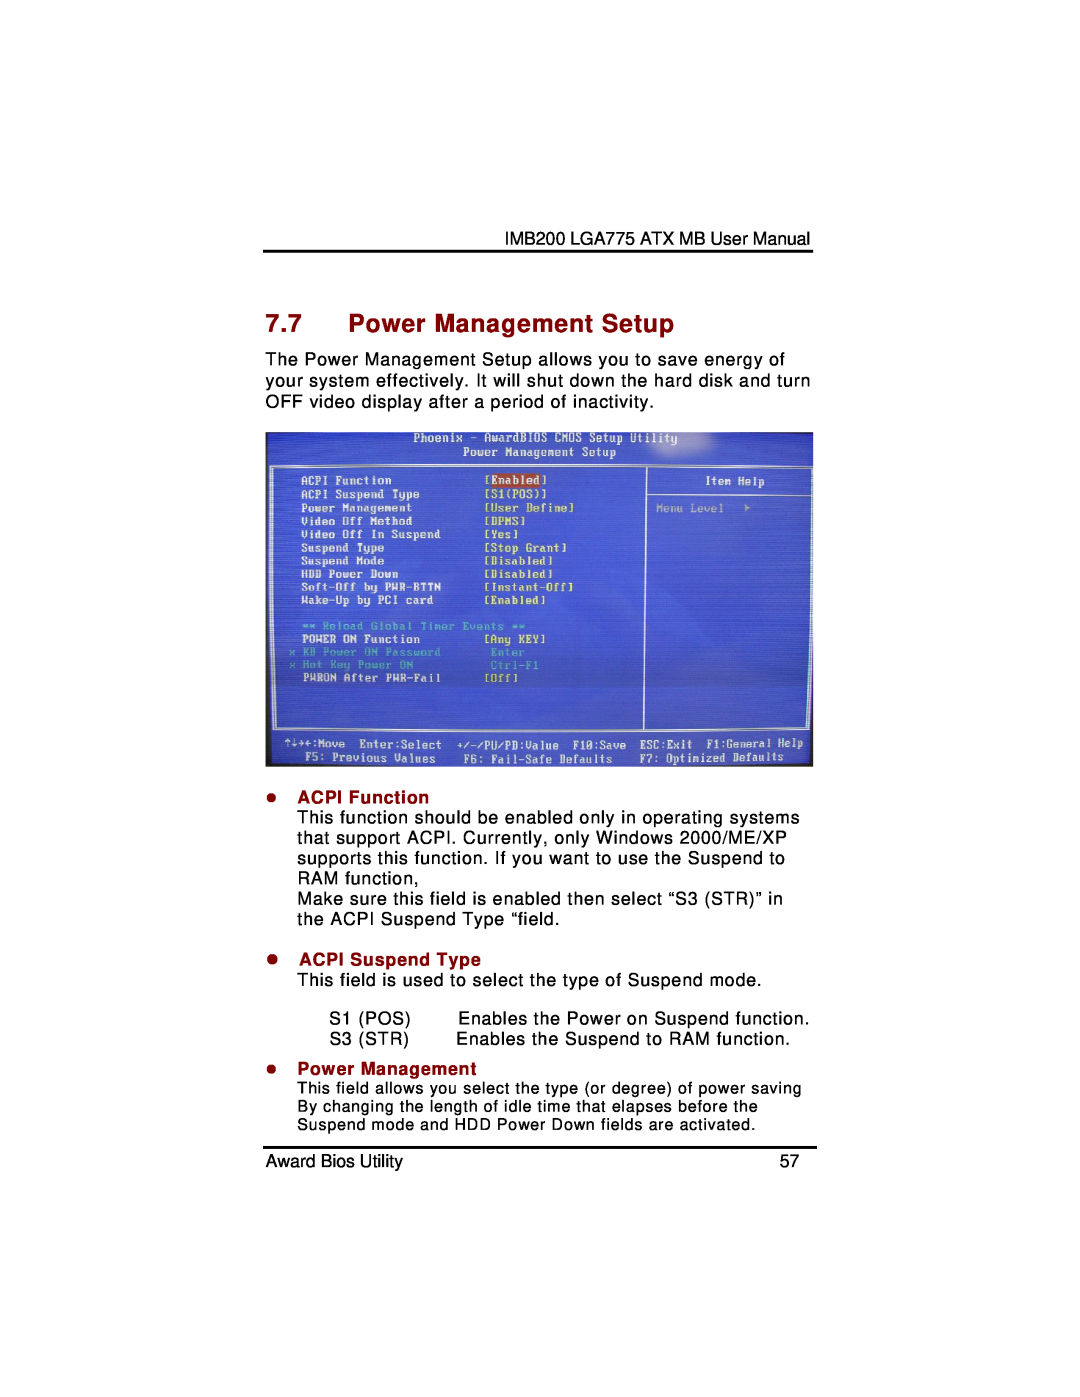 Intel IMB200VGE user manual Power Management Setup, z ACPI Function, z ACPI Suspend Type, z Power Management 